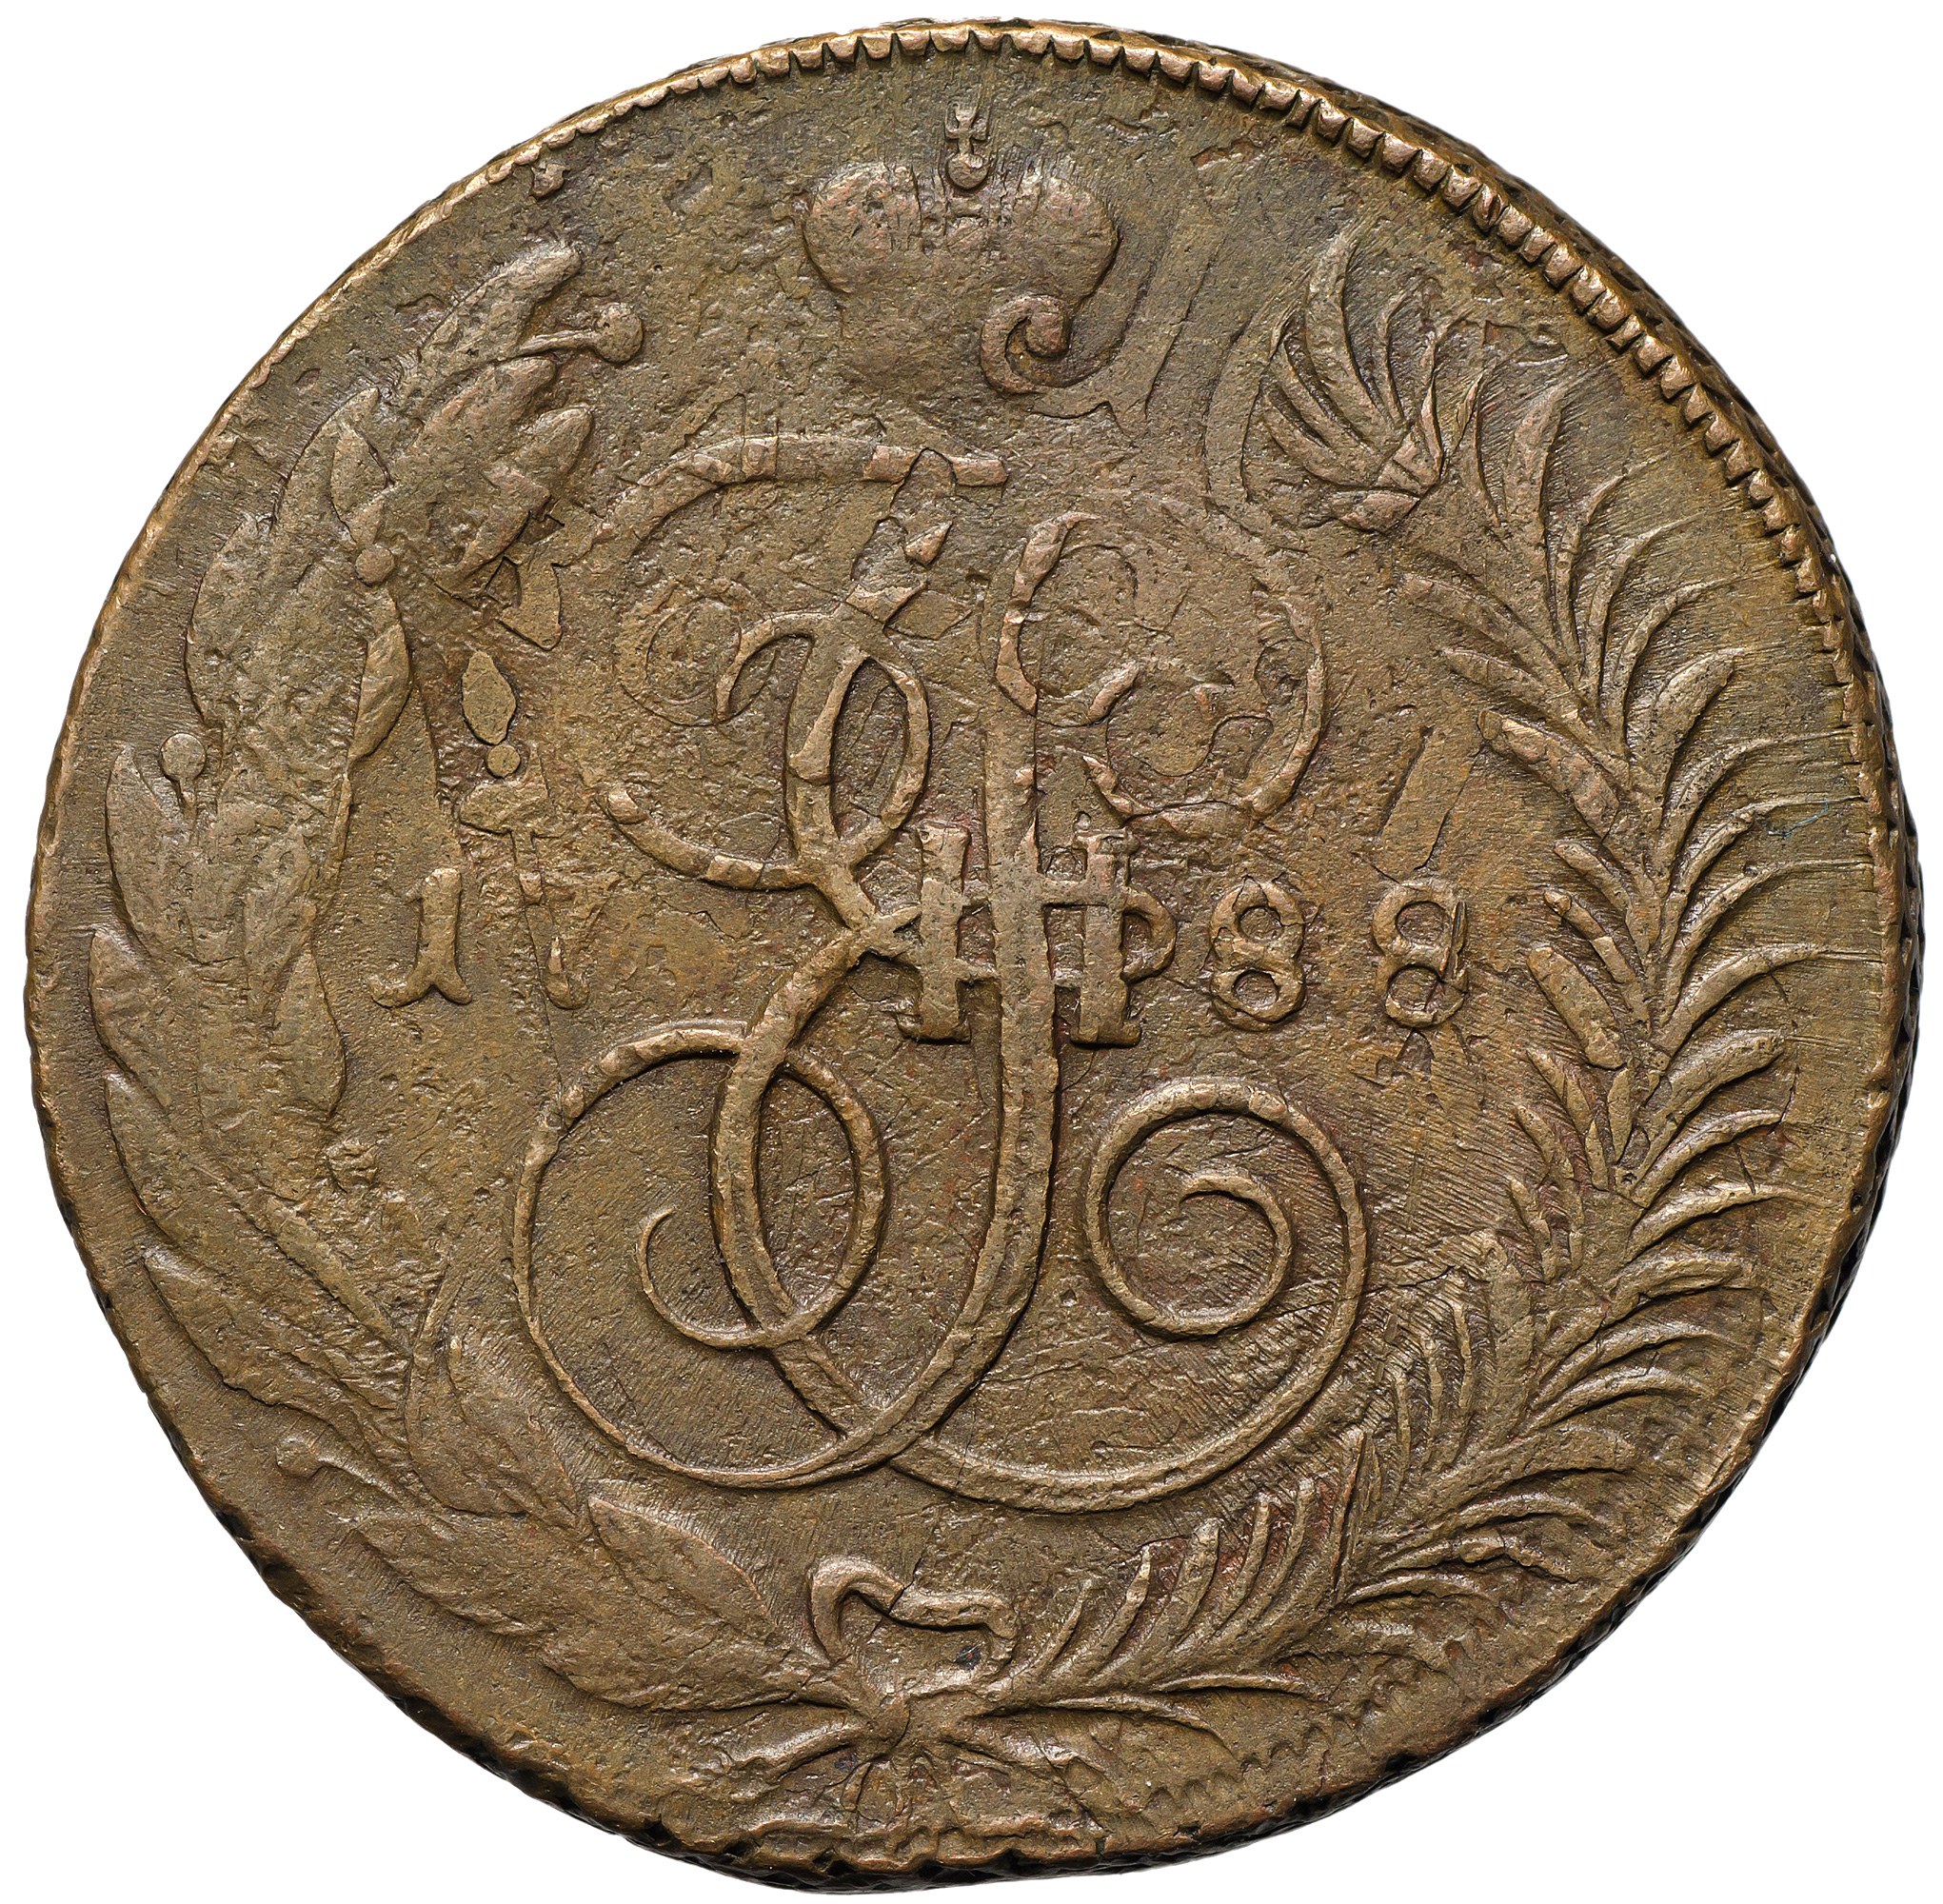 5 копеек сканворд. 5 Копеек 1789. Пять копеек 1789 года. Монета 1789 года.